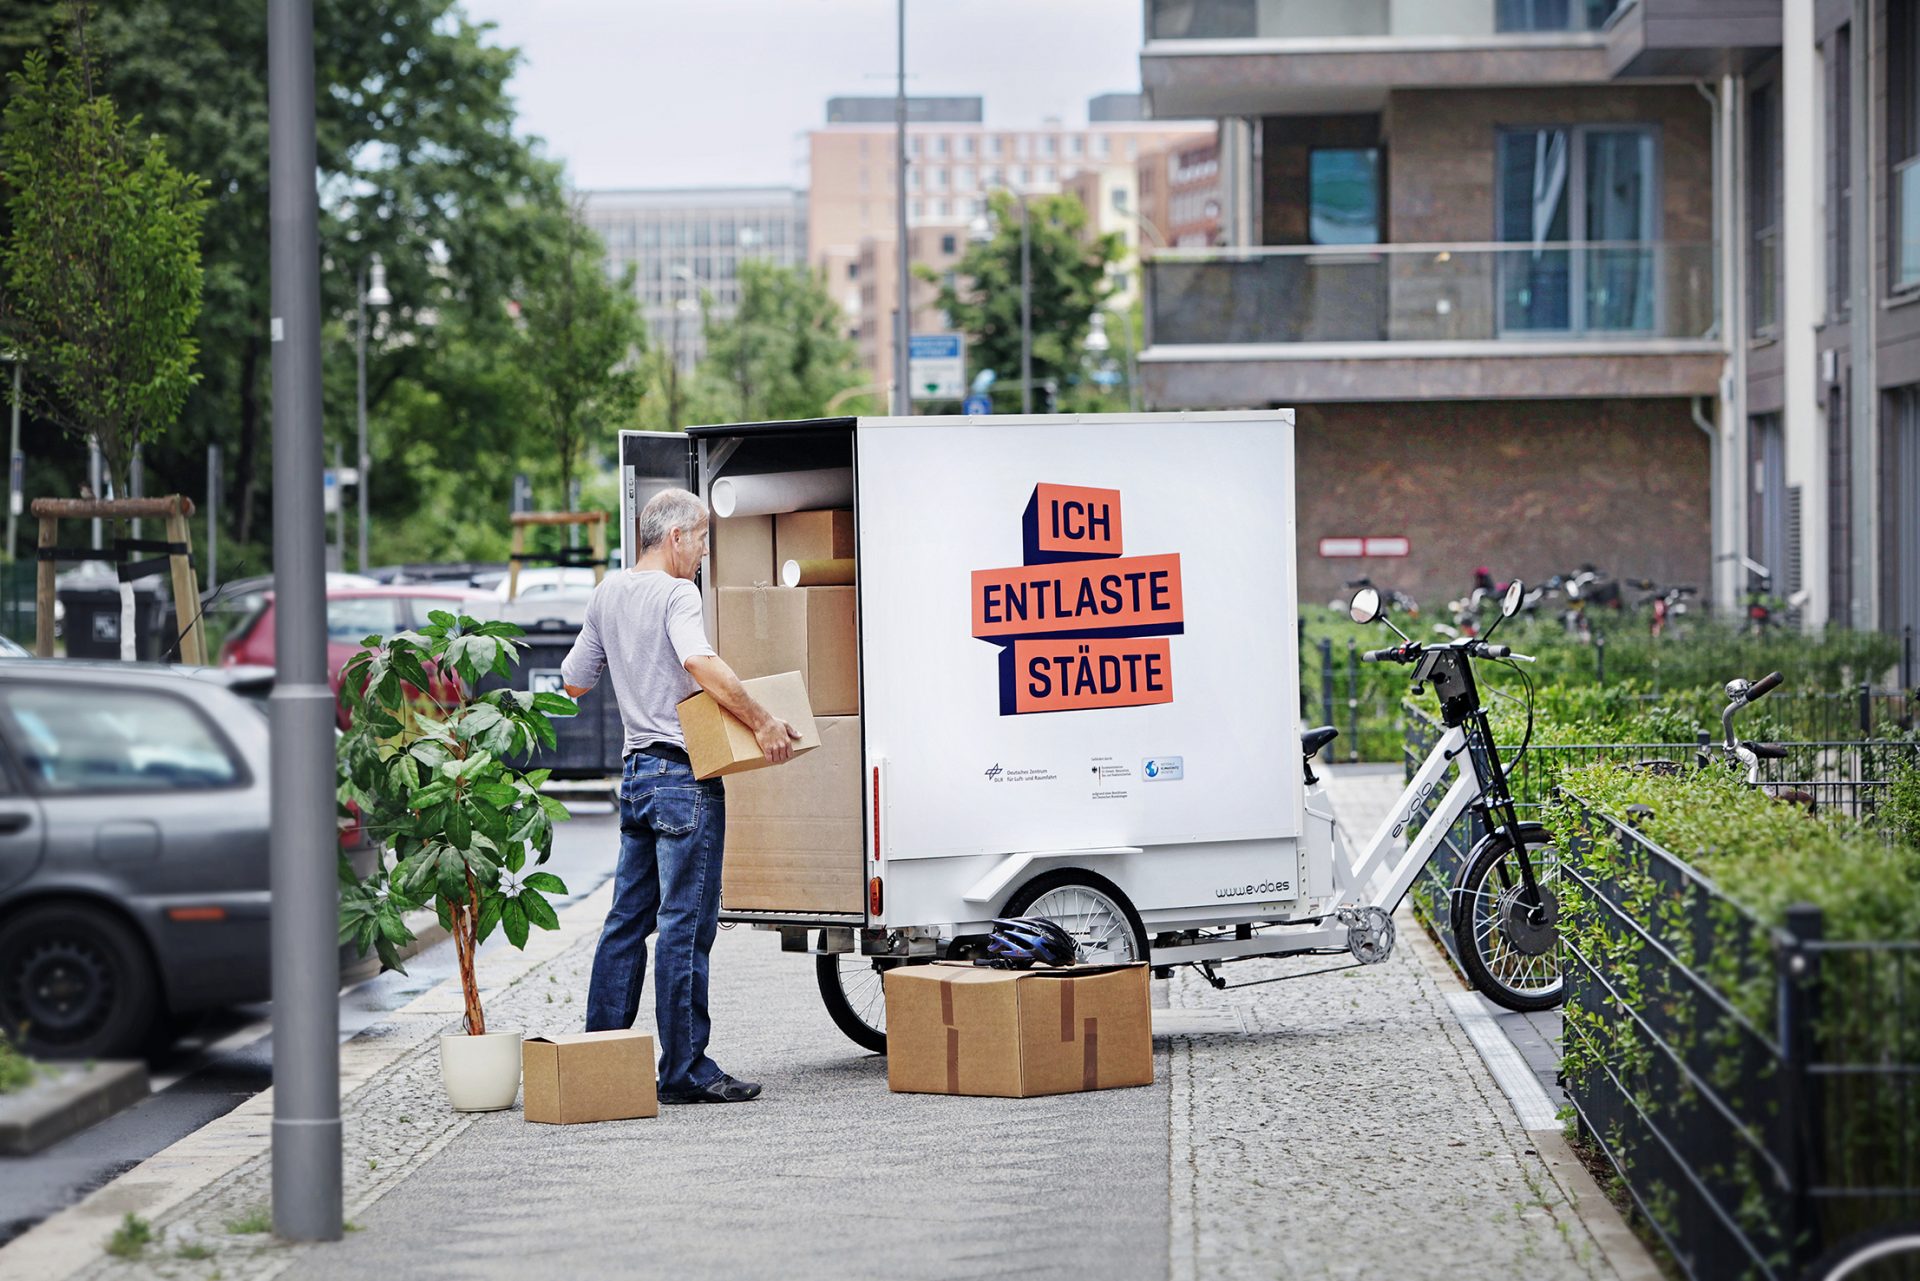 Un hombre carga en la acera una gran bicicleta de carga con cajas de mudanza. En la bicicleta está 